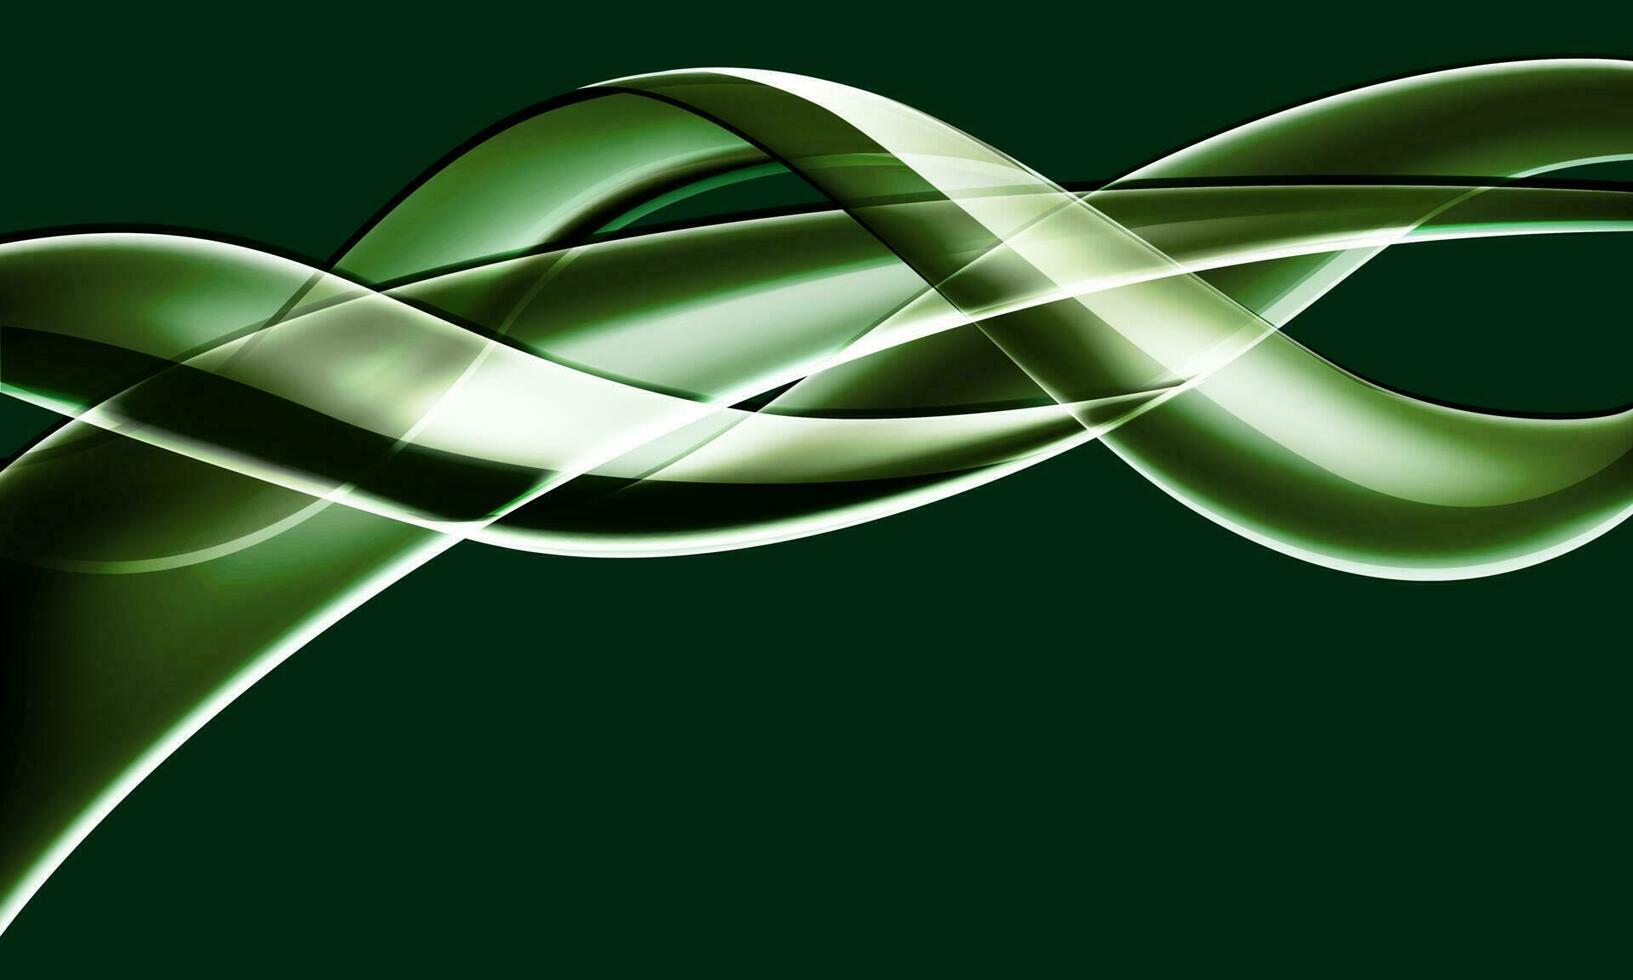 abstrakt grön glas glansig linje spiral kurva Vinka rörelse design modern lyx trogen teknologi kreativ bakgrund vektor